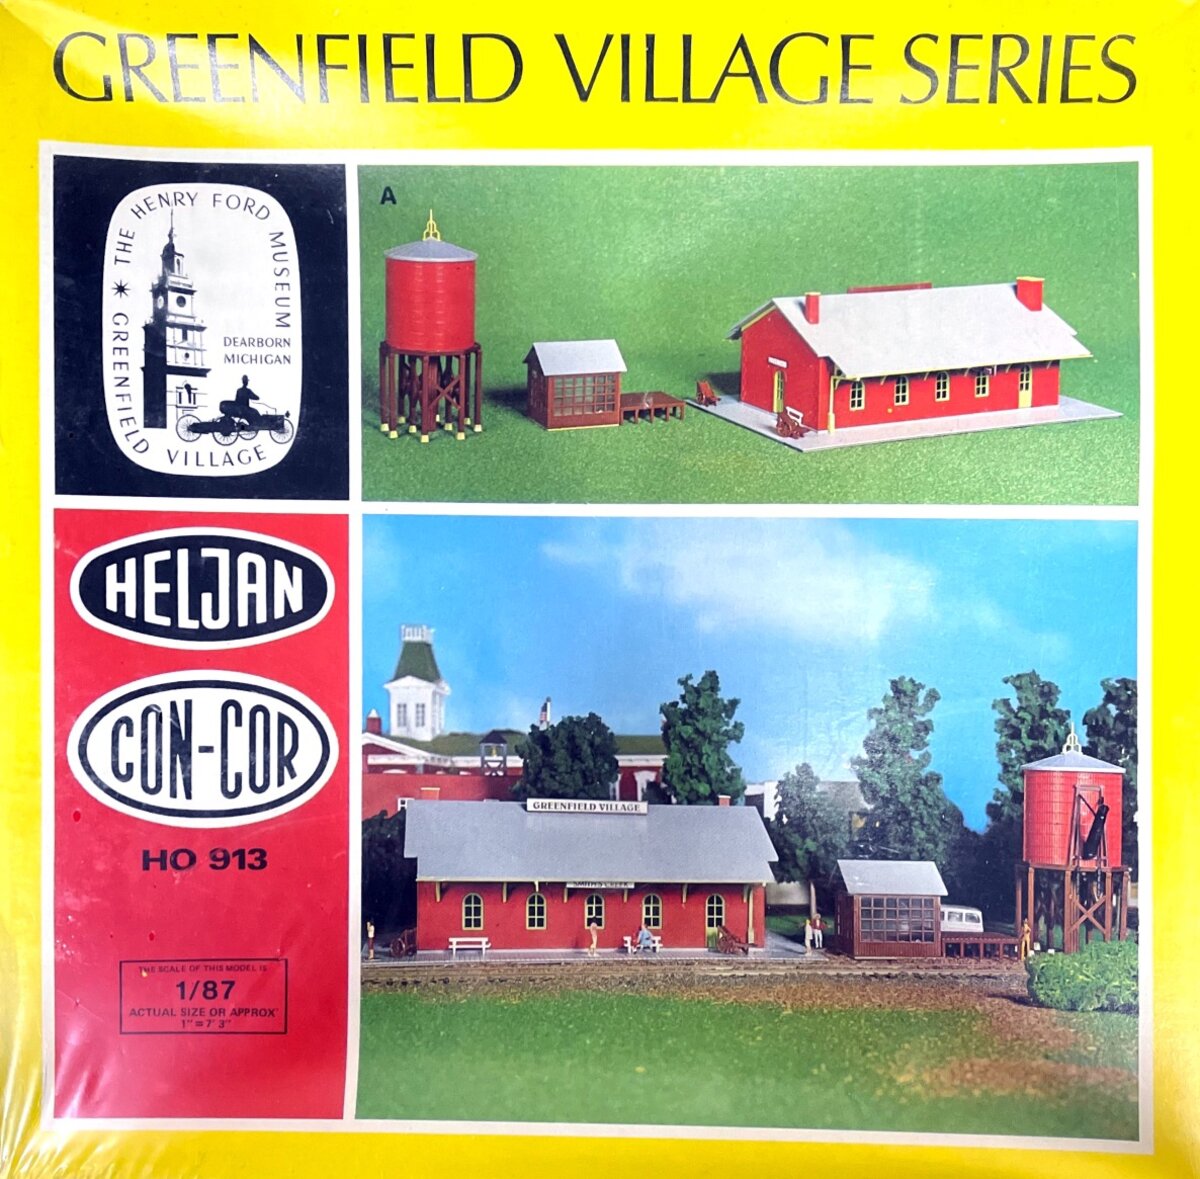 Heljan 913 HO Smith's Creek Station Greenfield Village Series Building Kit